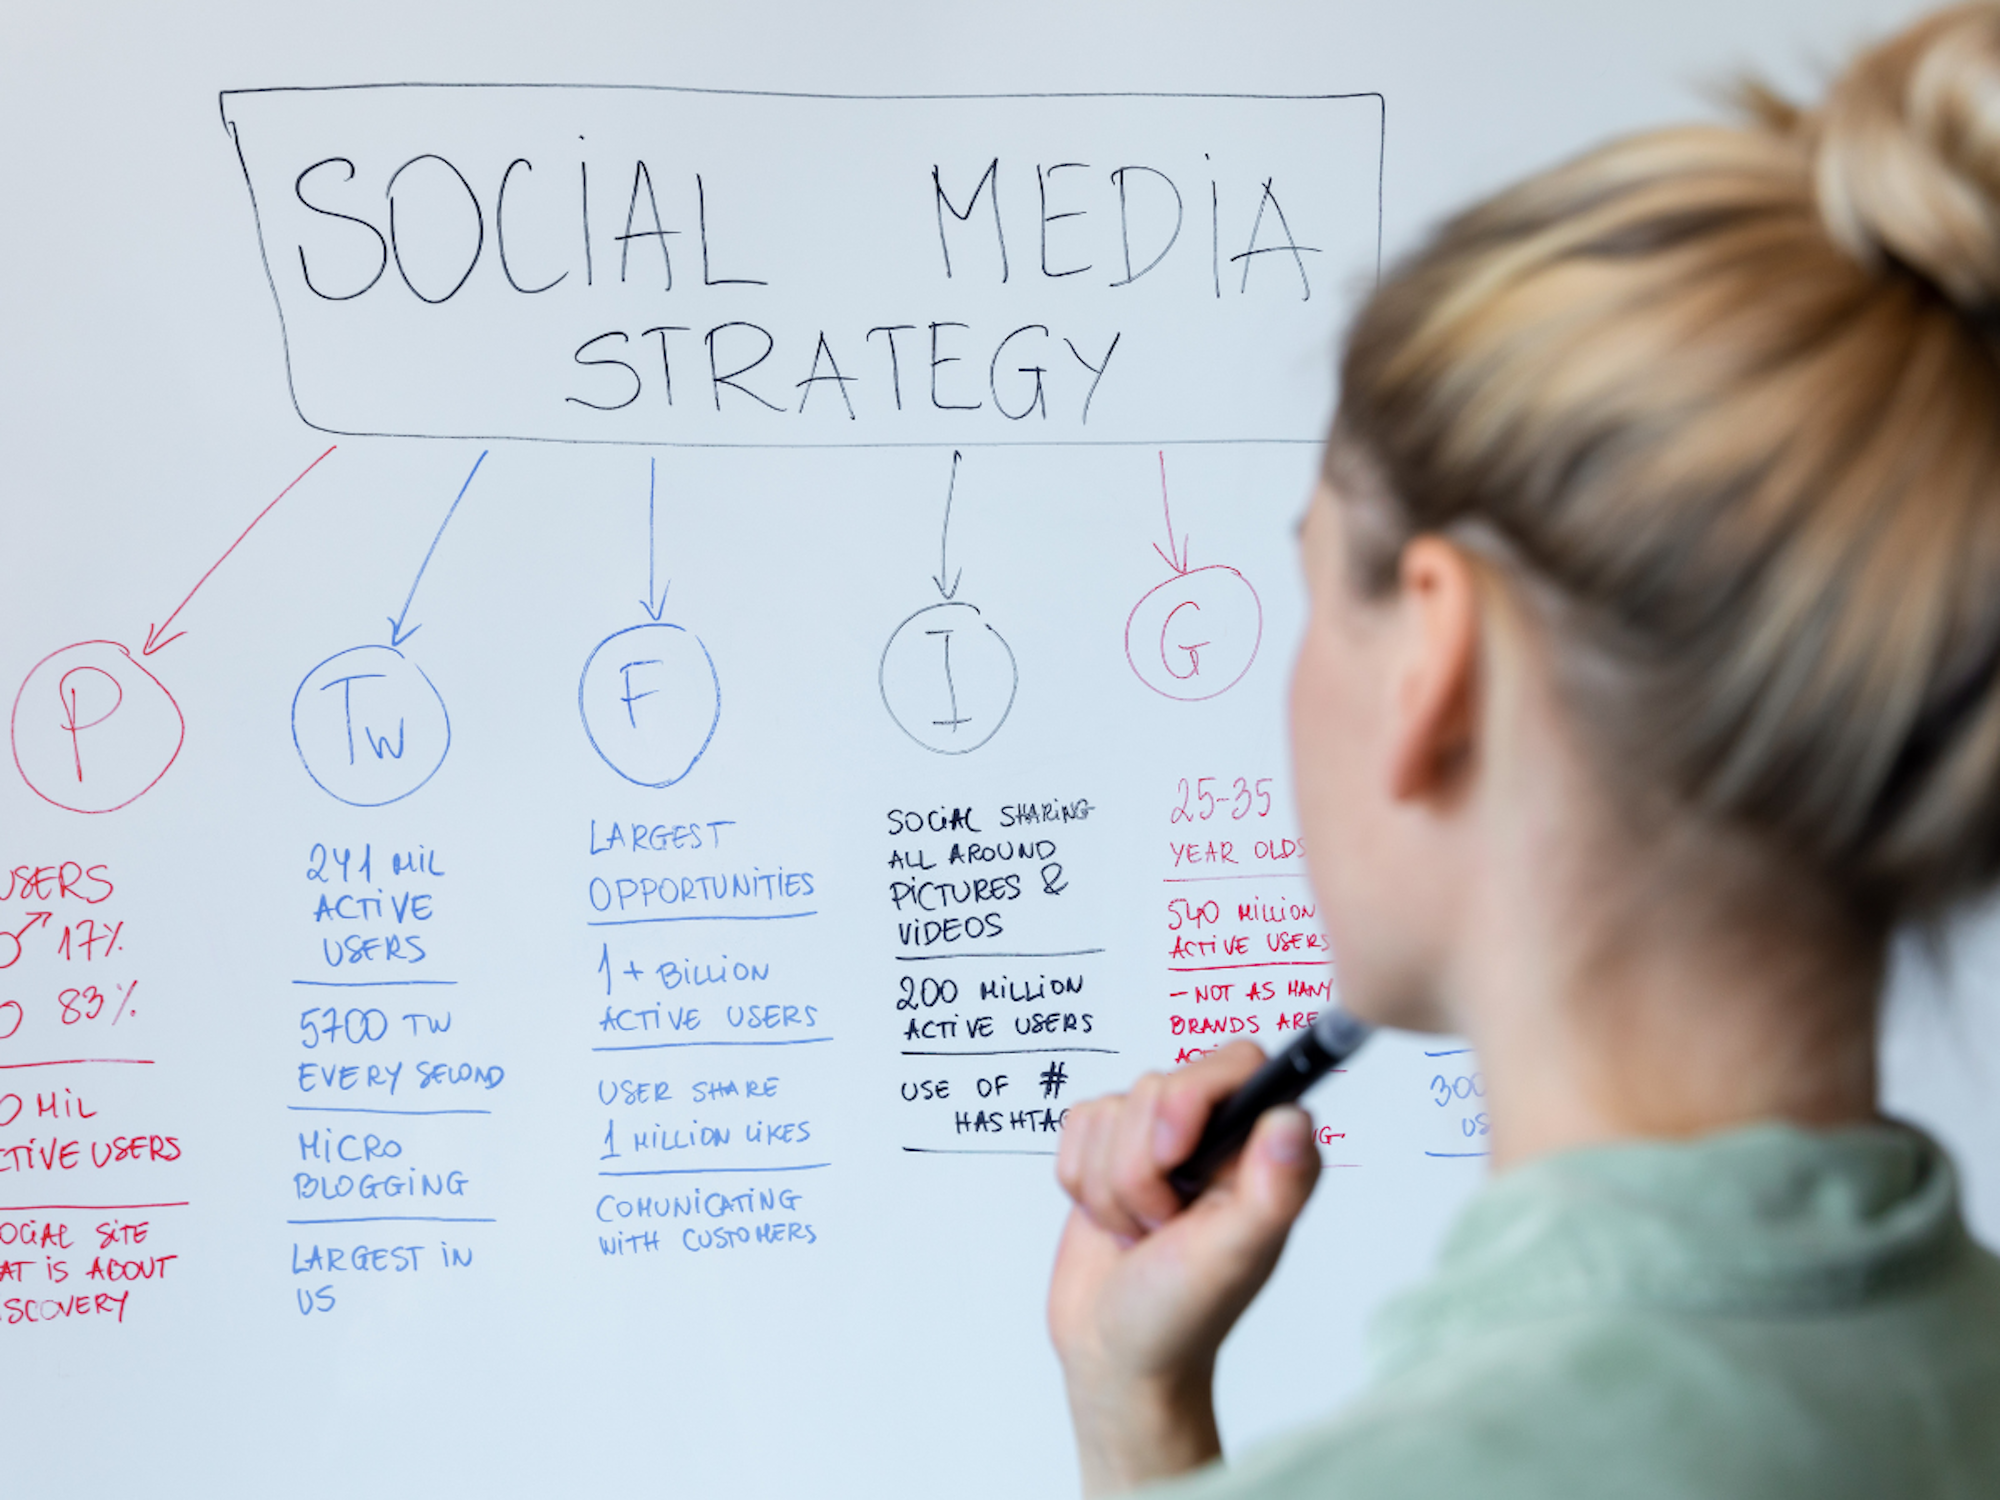 Strategising platform specific content for social media engagement